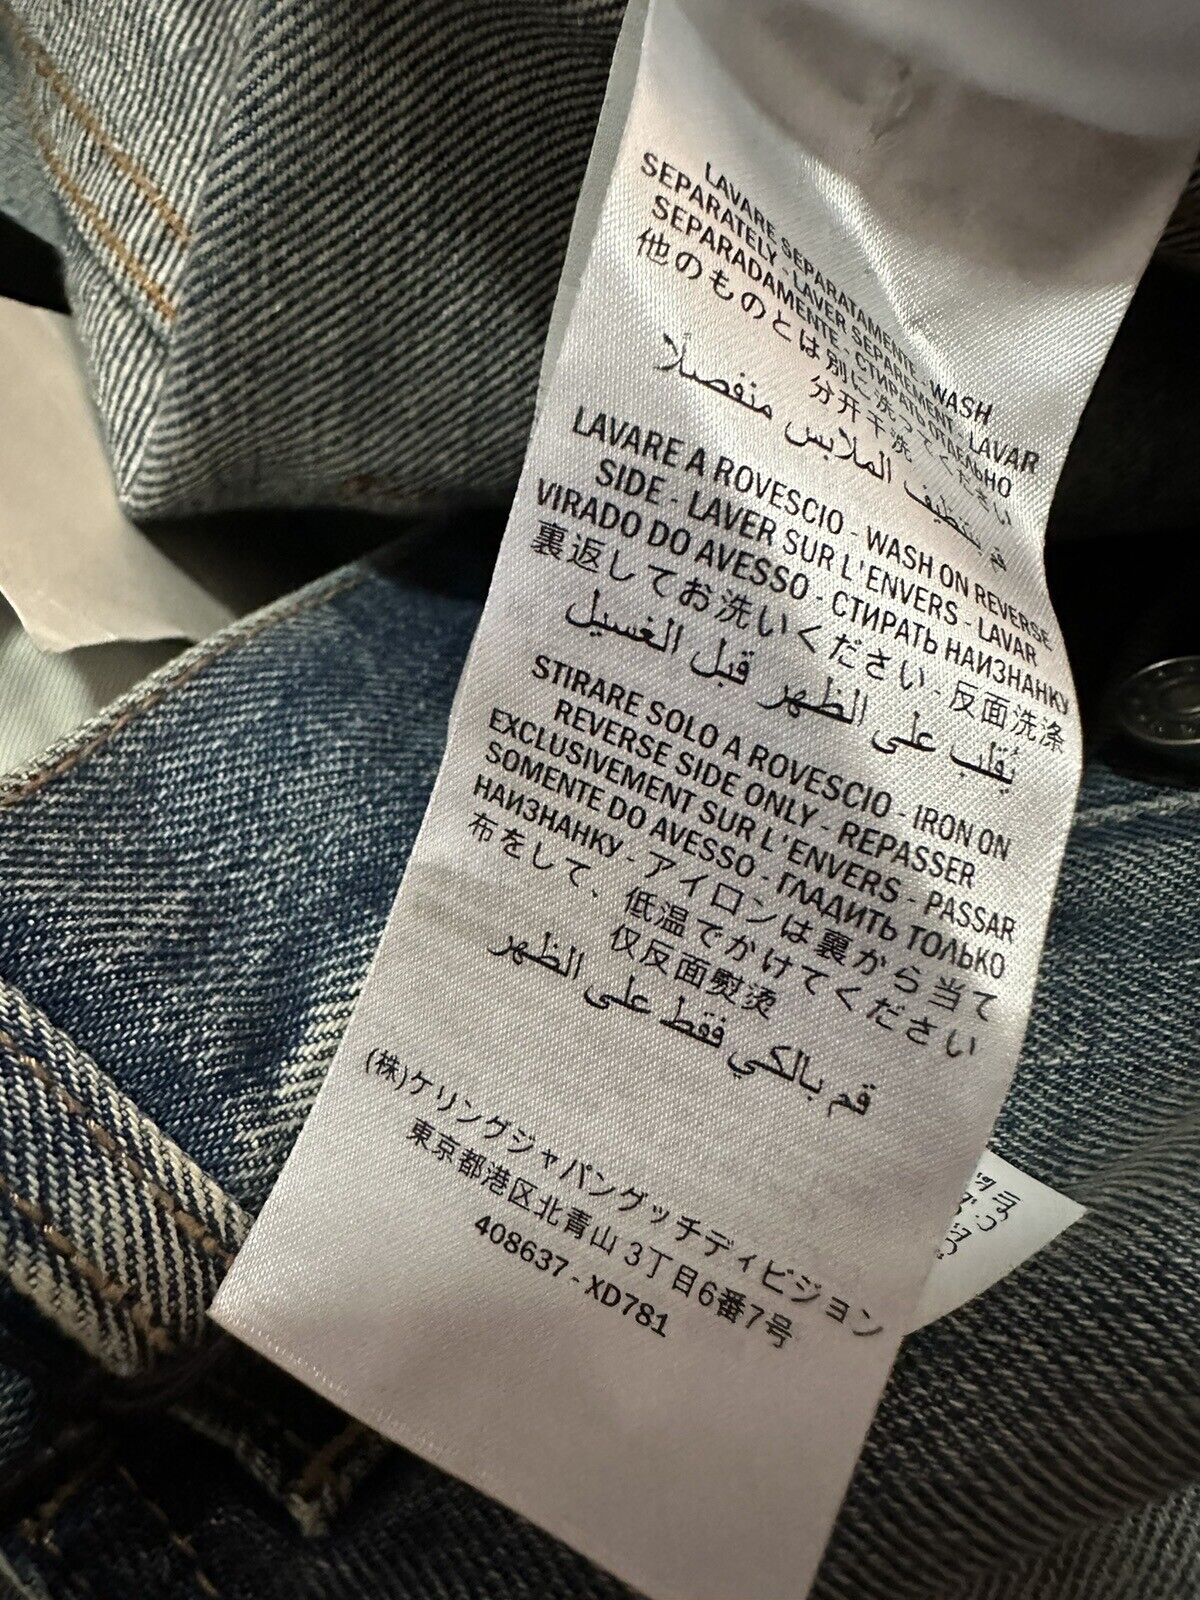 Neue 1280 $ Gucci Herren Jeans Denim Hose Blau 36 US Italien